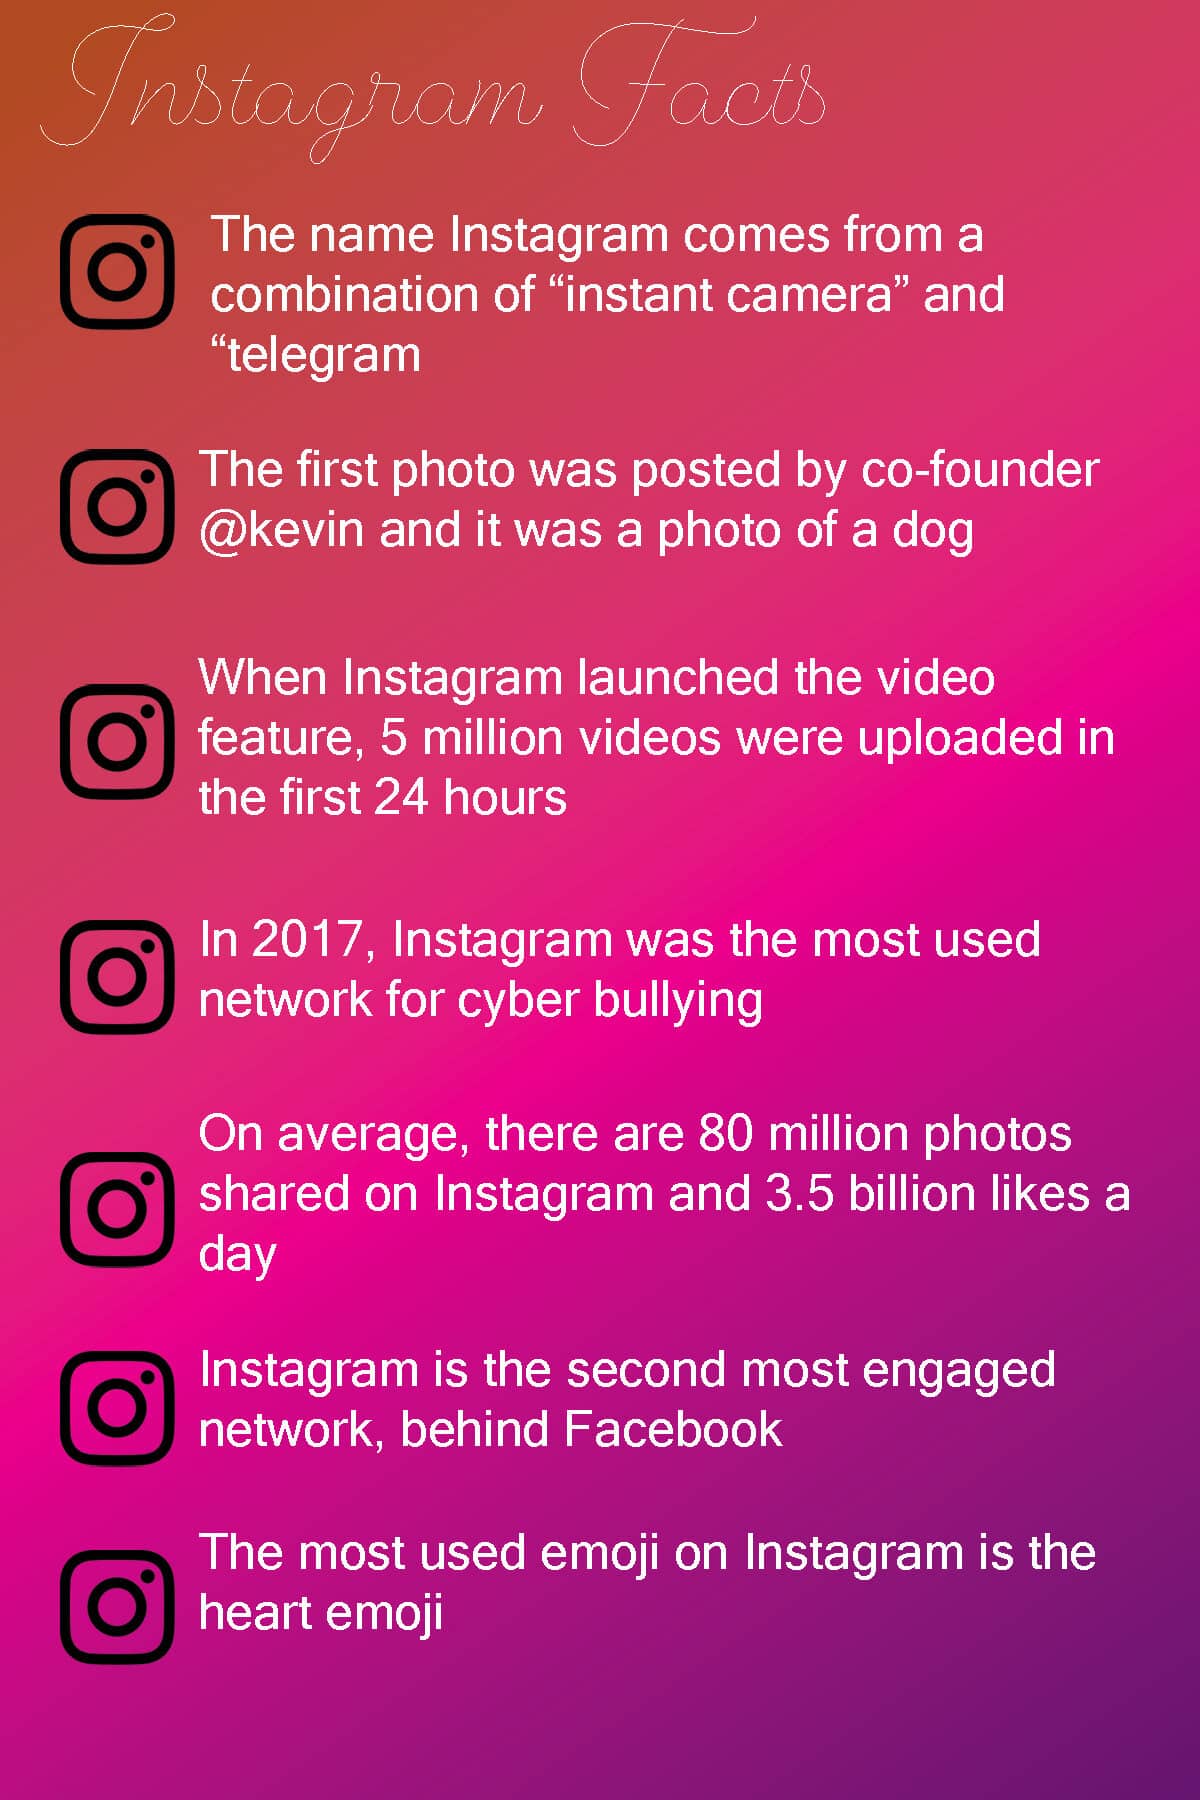 Instagram Facts.jpg